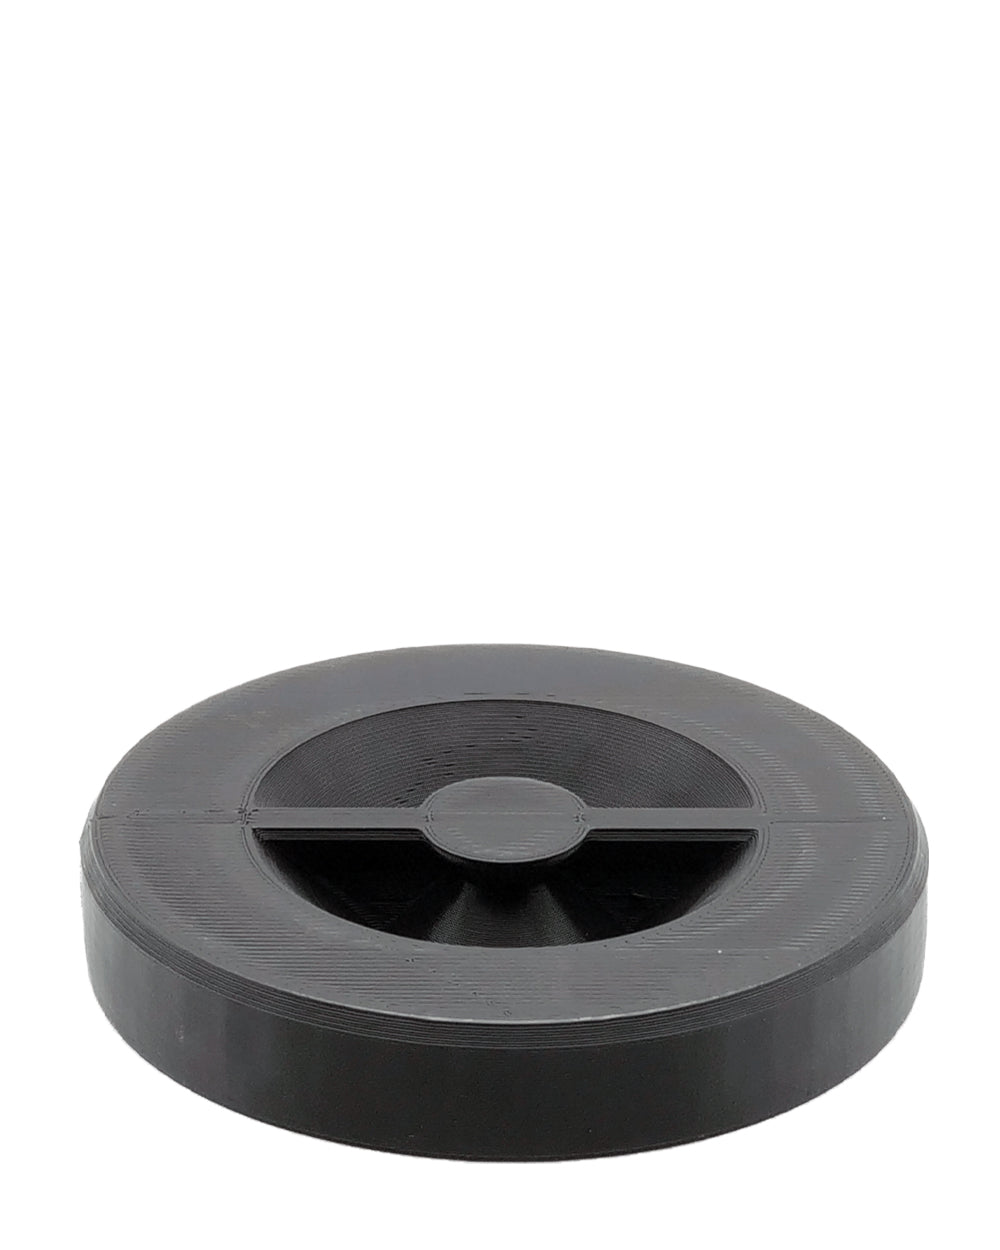 HUMBOLDT | Black Pre-Rolled Cones Filling Machine Cartridge 109mm | Fill 55 Cones Per Run - 3